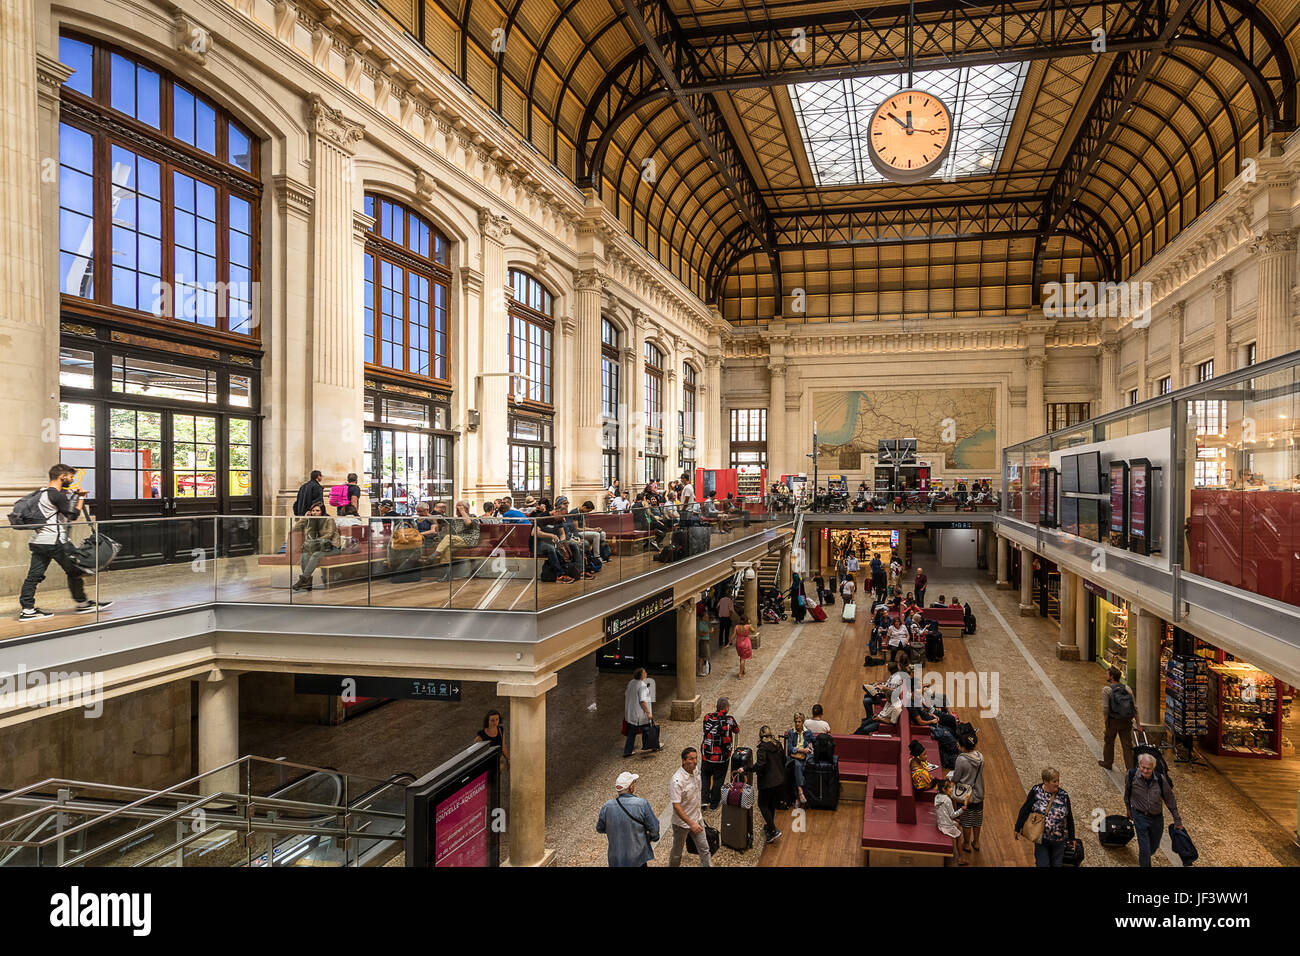 Gare St Jean railway station in Bordeaux Stock Photo - Alamy